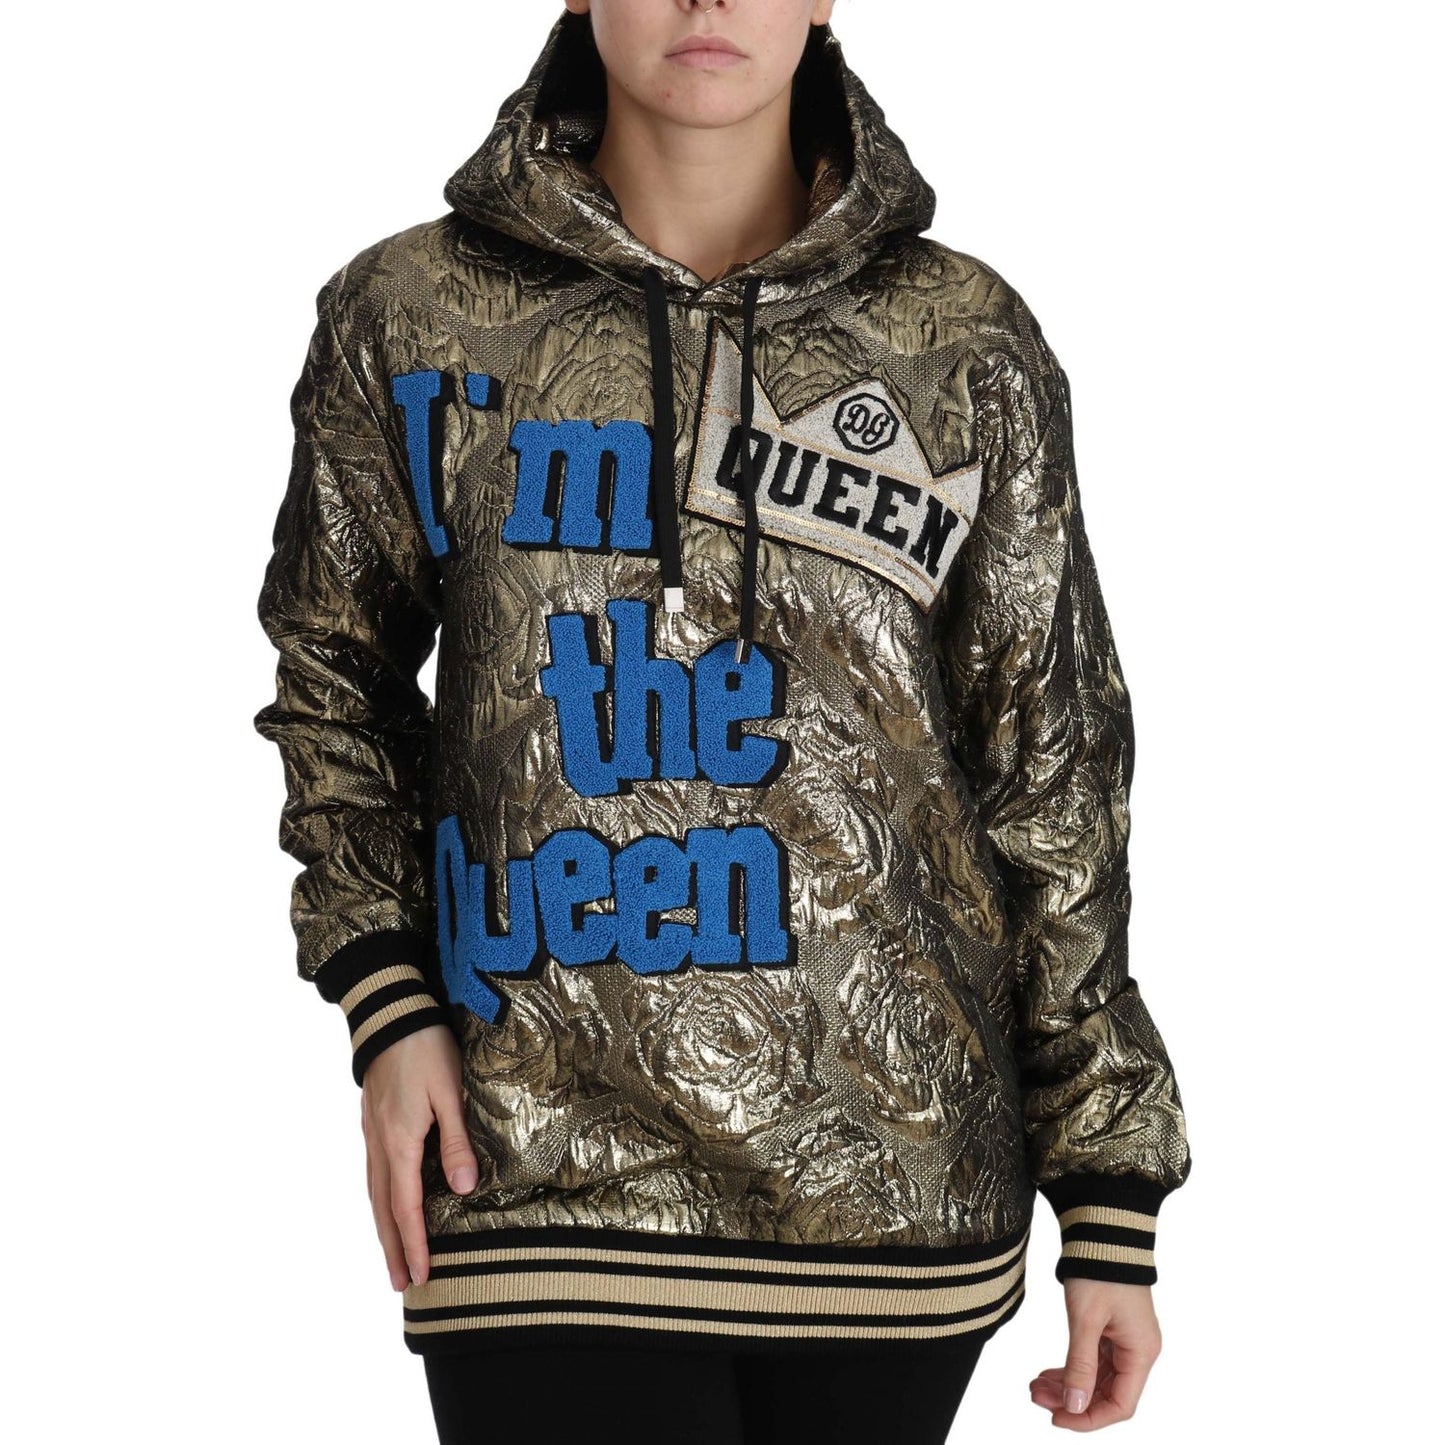 Dolce & Gabbana Im The Queen Multicolor Hoodie Sweatshirt im-the-queen-jaquard-gold-sweatshirt-hoodie 652661-im-the-queen-jaquard-gold-sweatshirt-hoodie-3.jpg